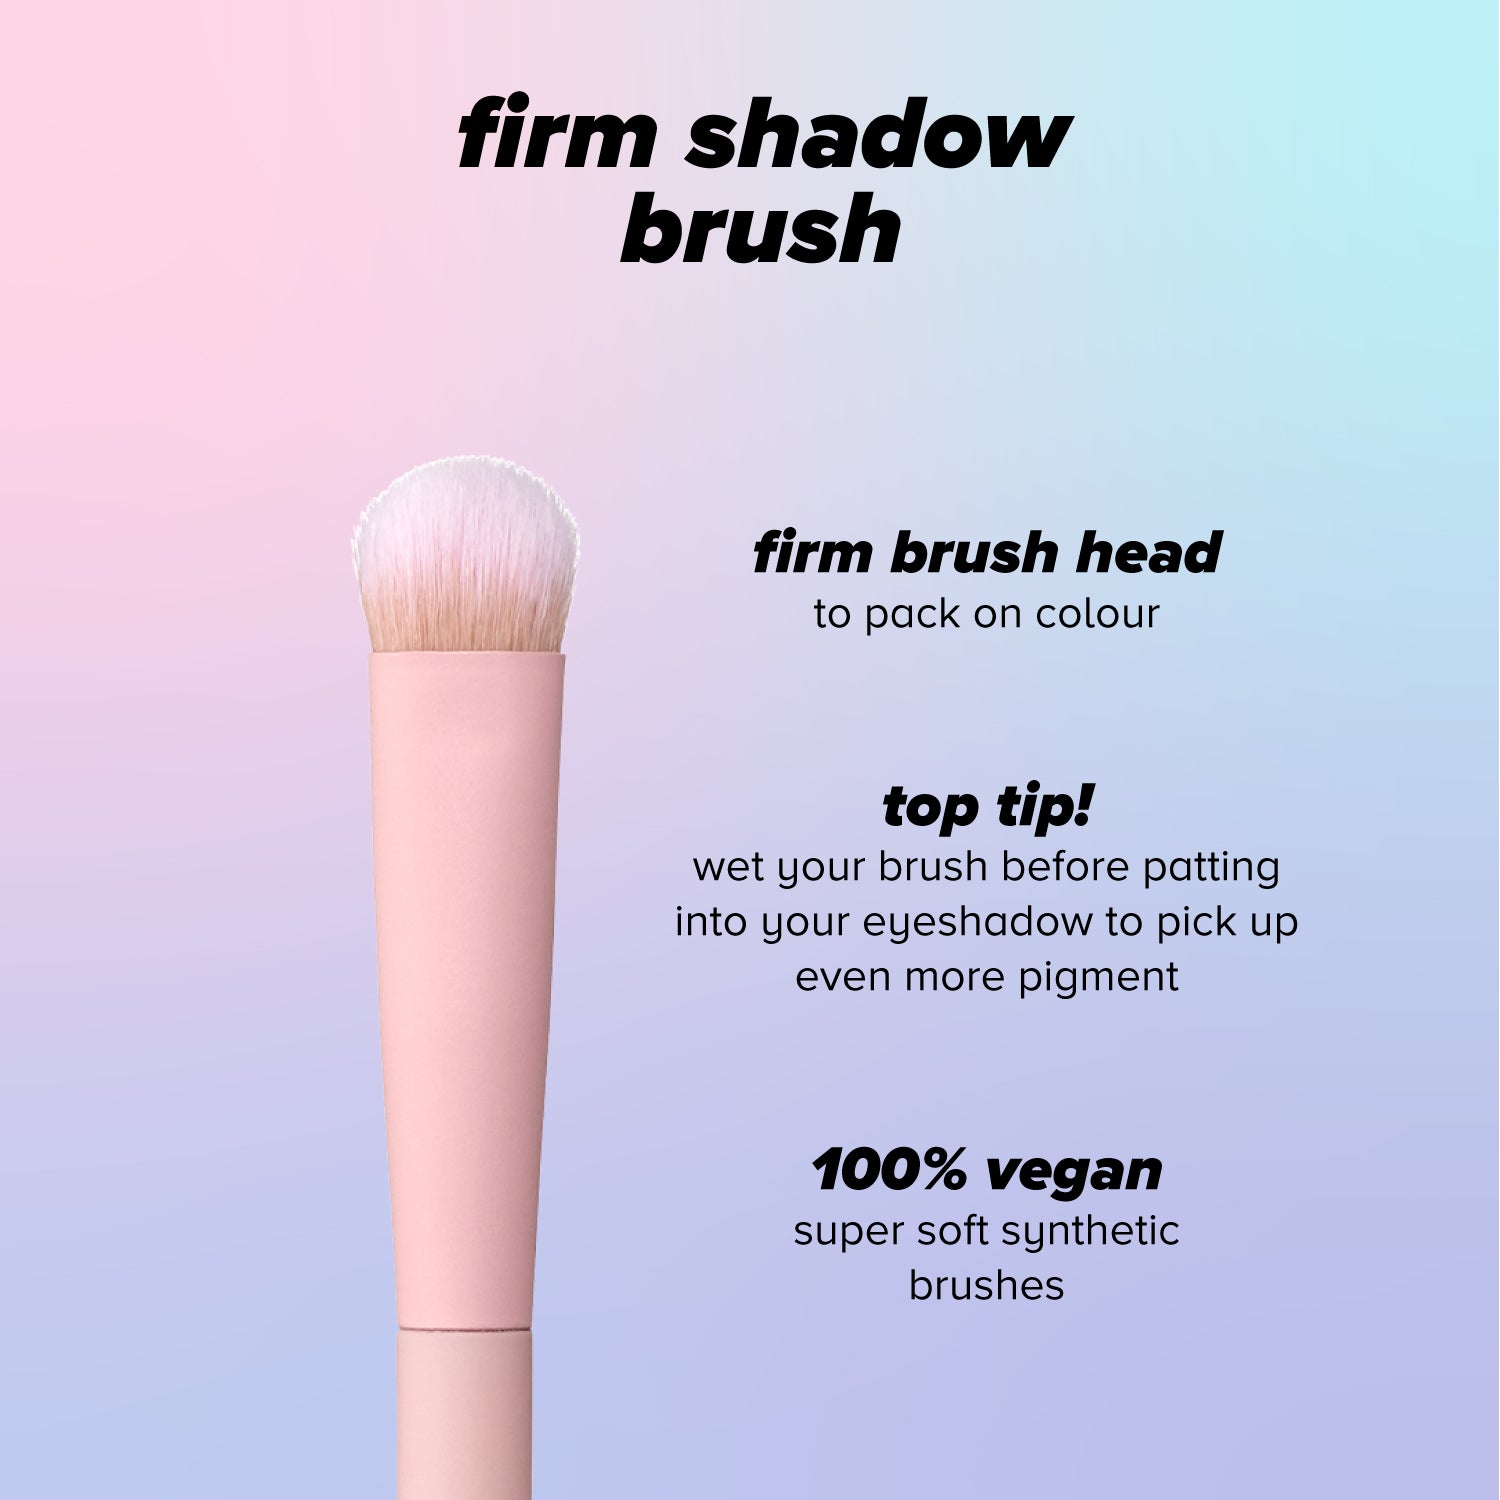 firm shadow brush